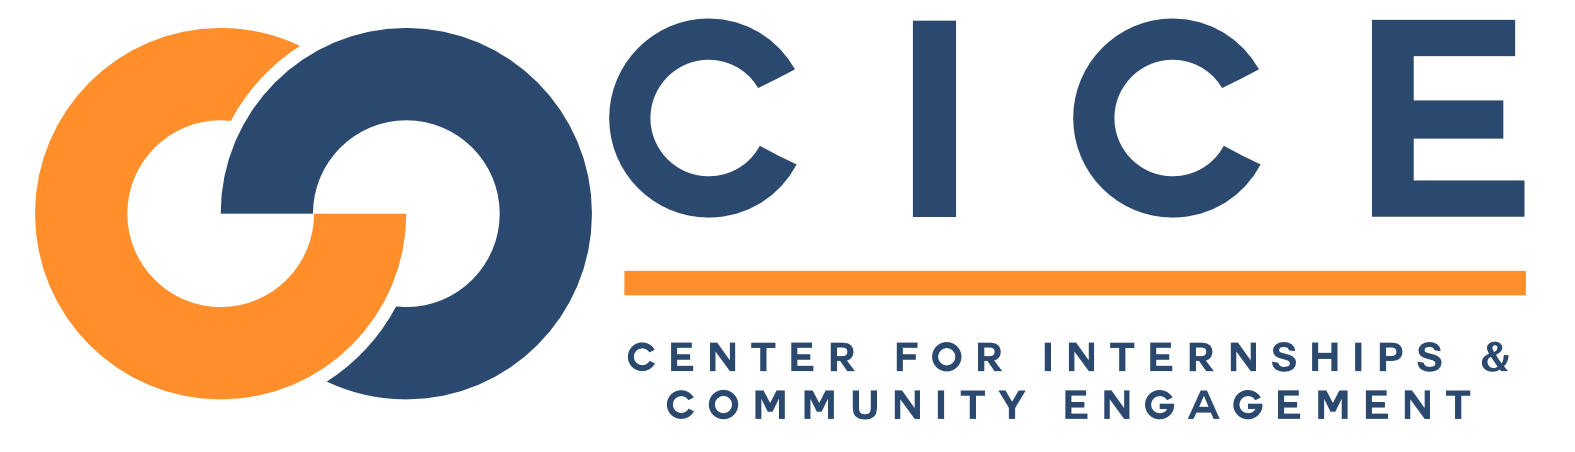 CICE logo with tagline color